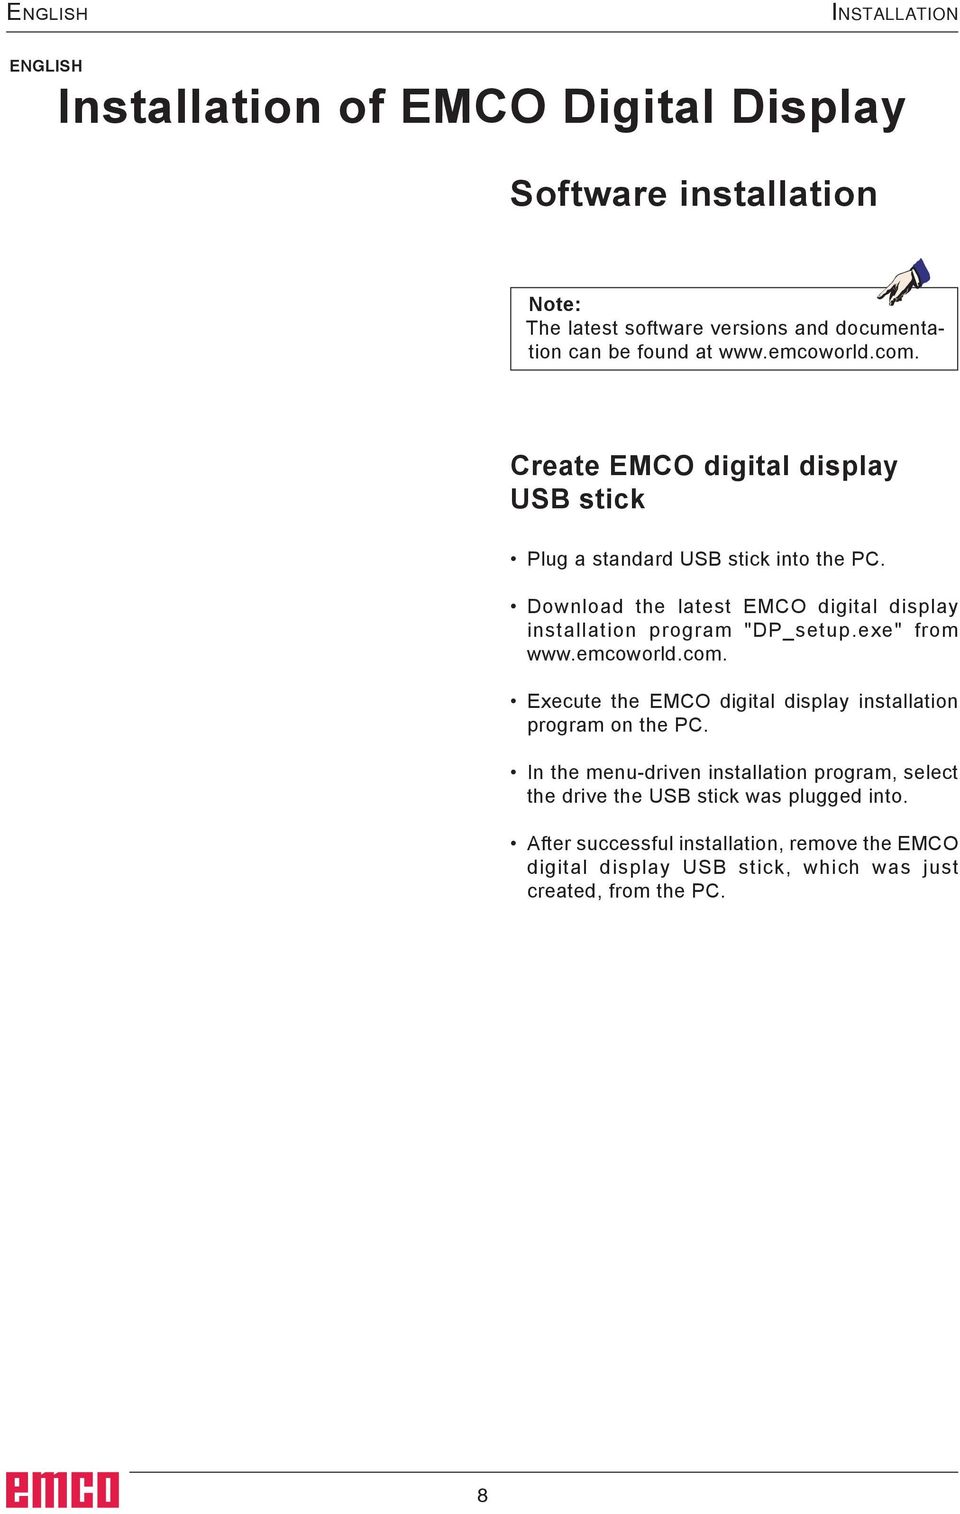 Download the latest EMCO digital display installation program "DP_setup.exe" from www.emcoworld.com.